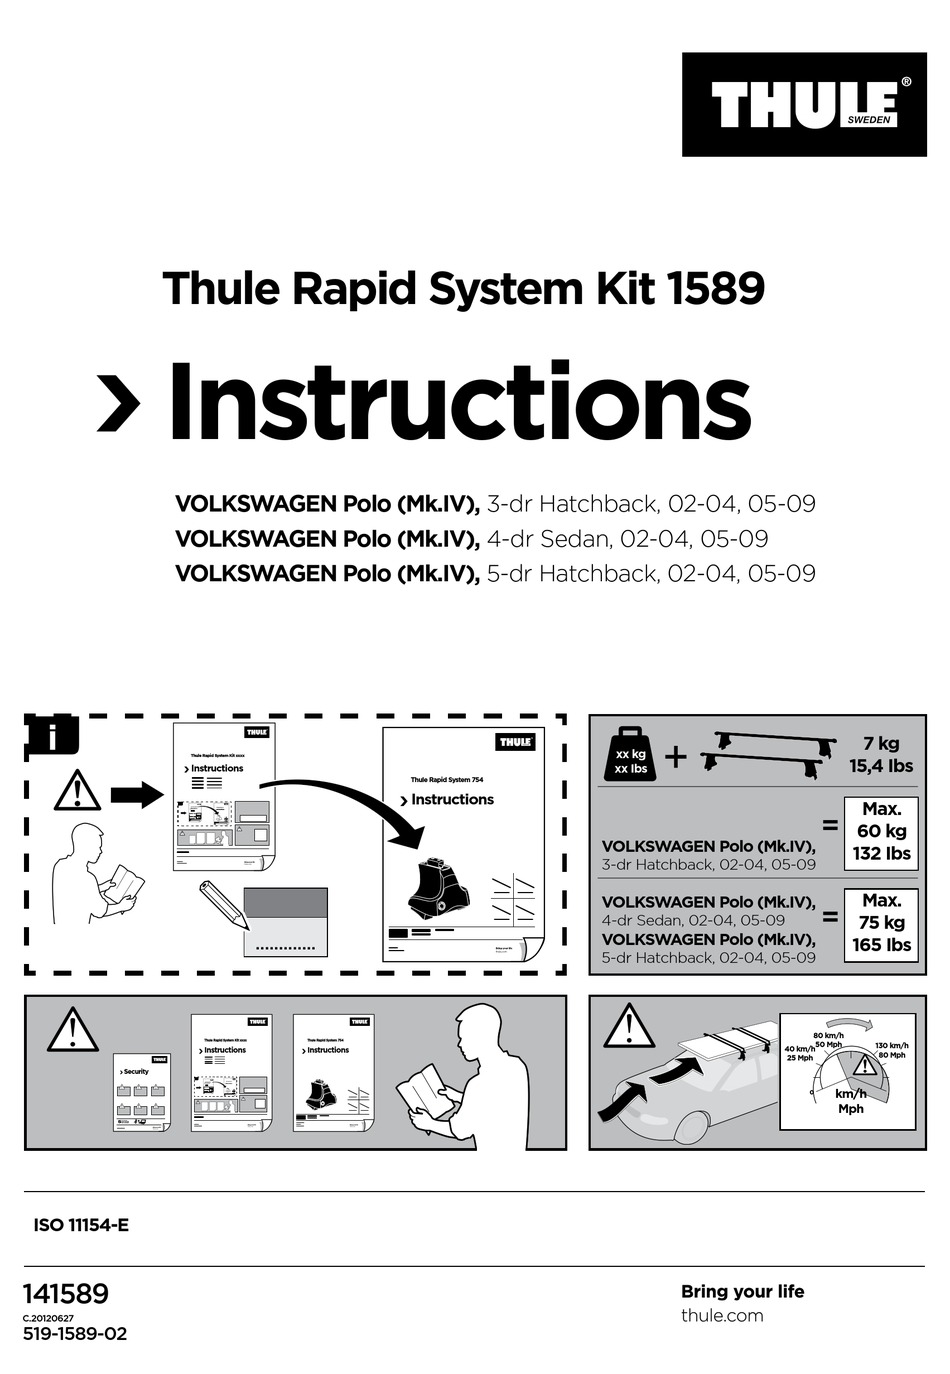 Thule 1589 Rapid Fitting Kit 